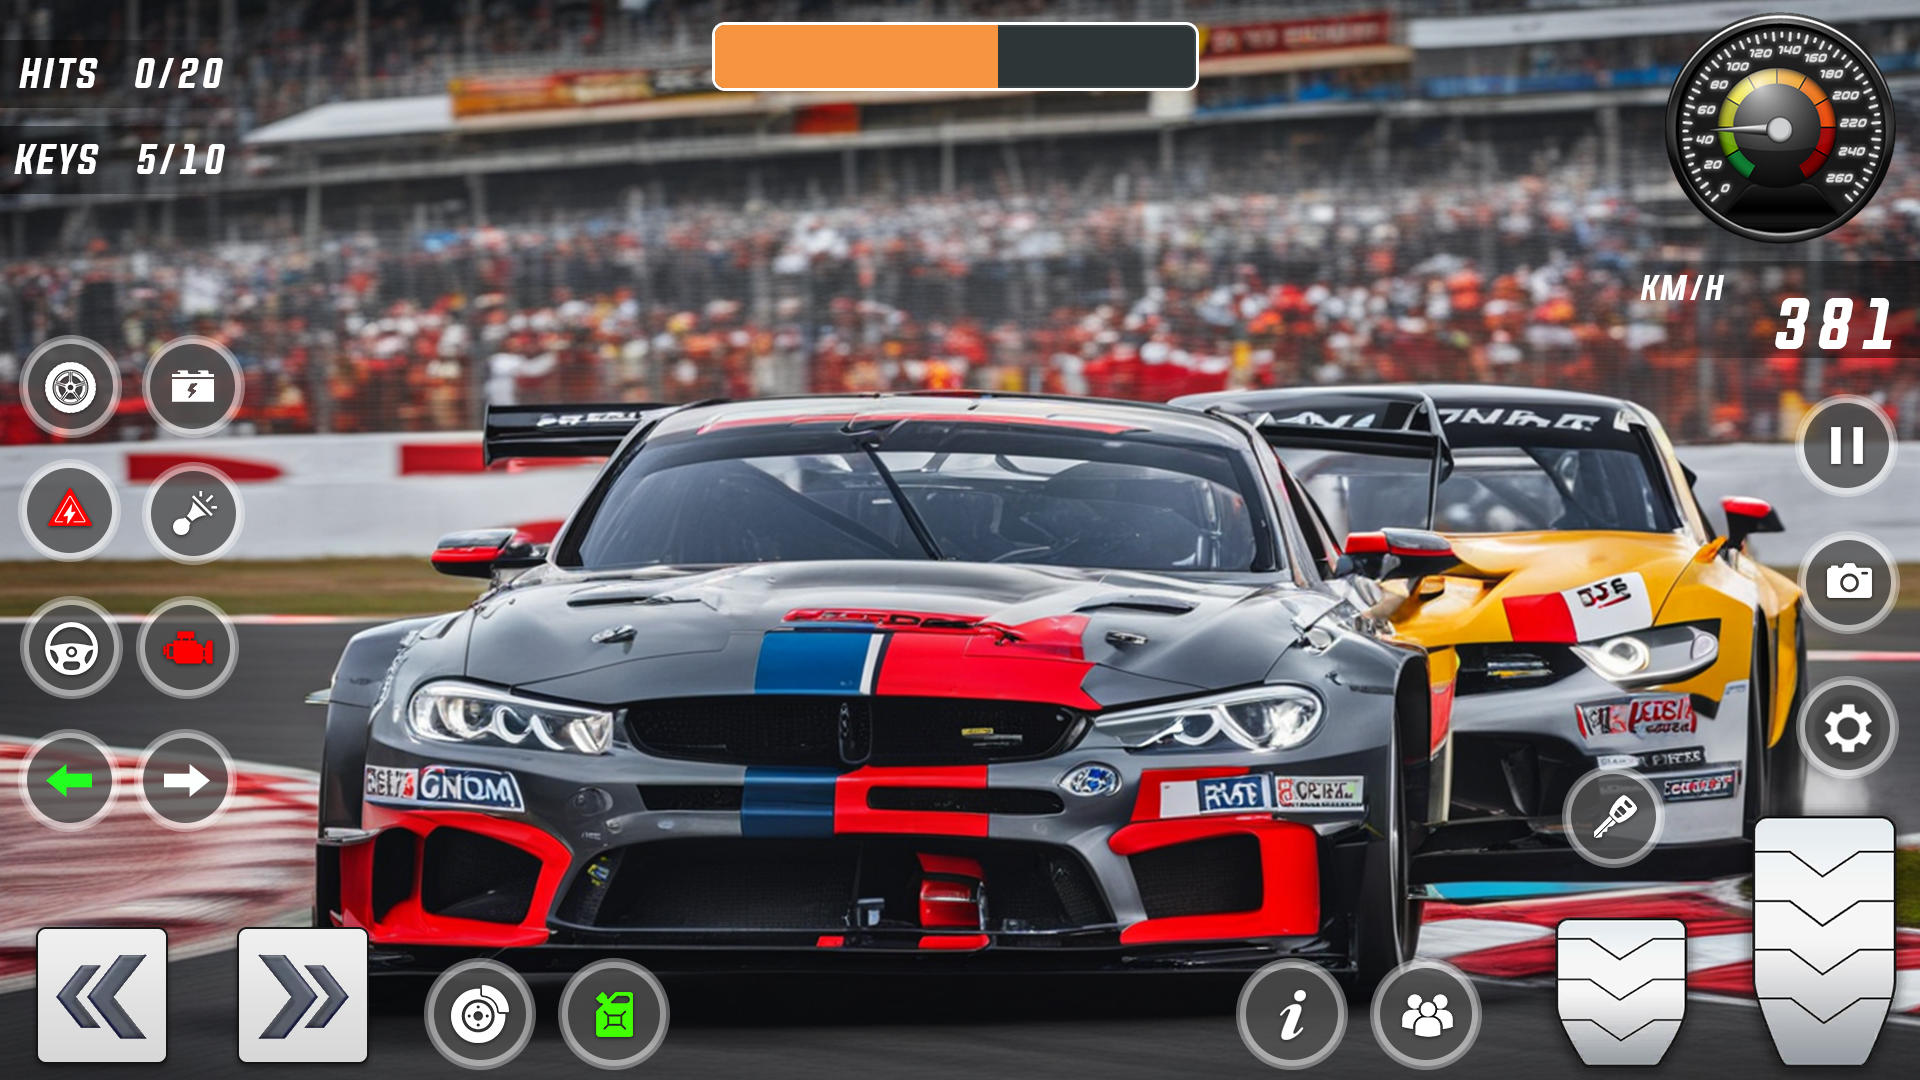 Real Drift Car Simulator 3D - Sports Car Drift Games - Android